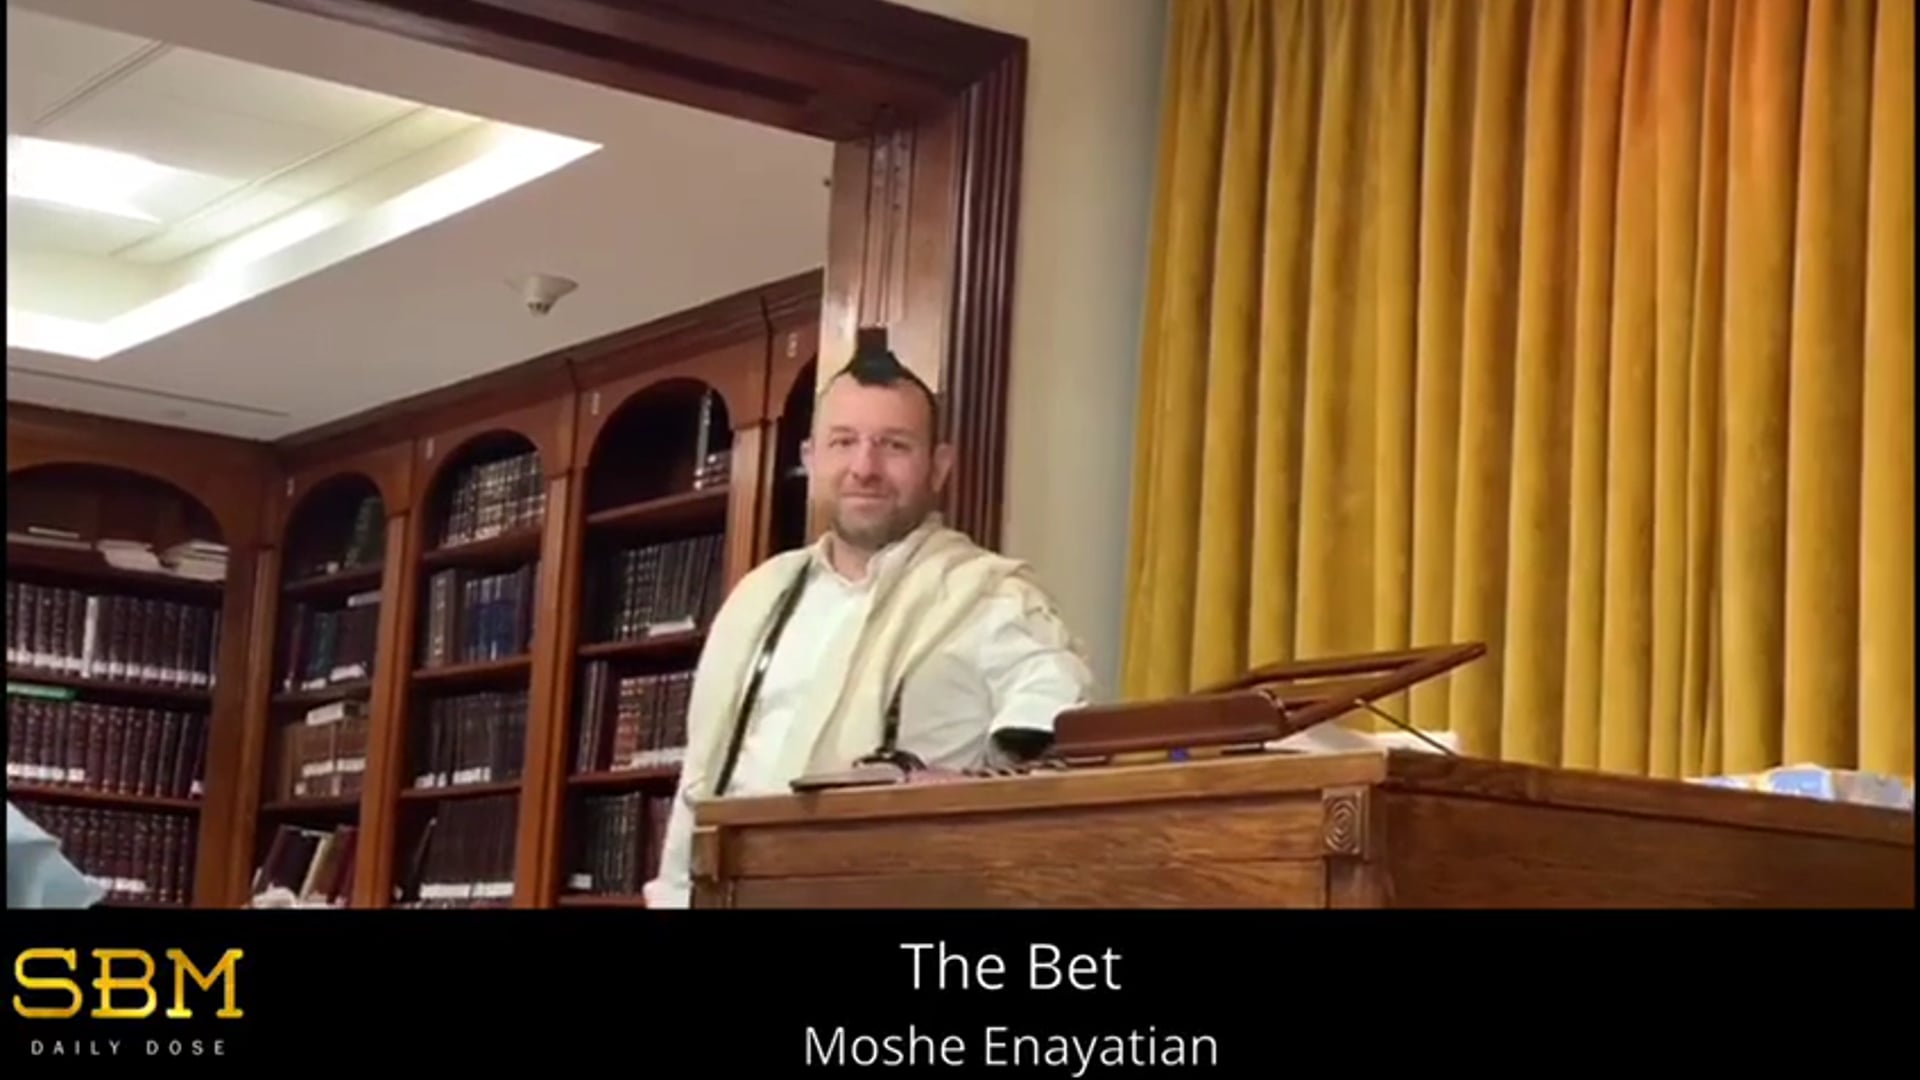 The Bet - Moshe Enayatian